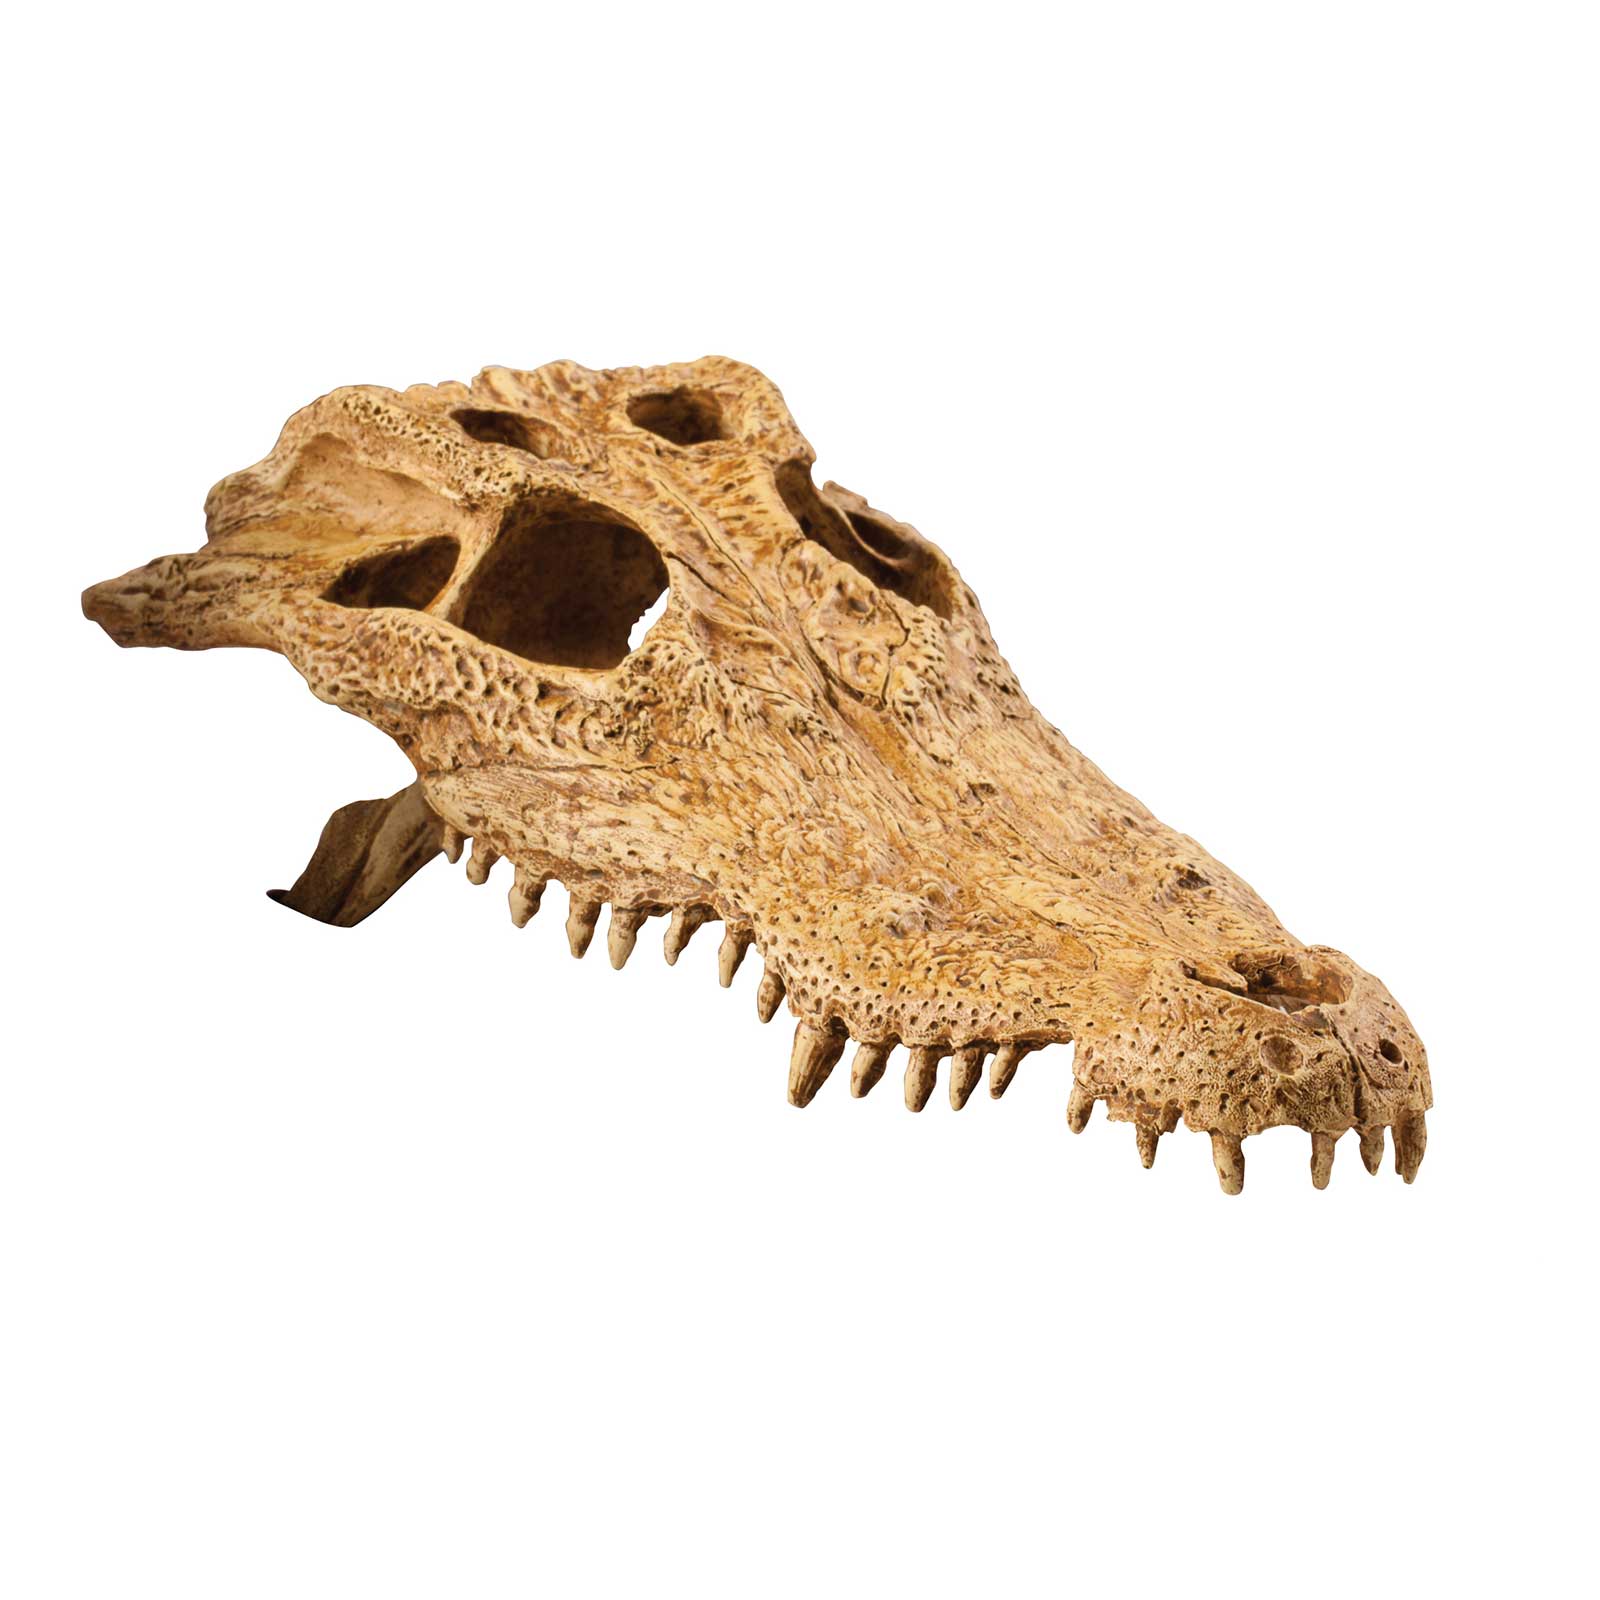 Exo Terra Ornament Crocodile Skull